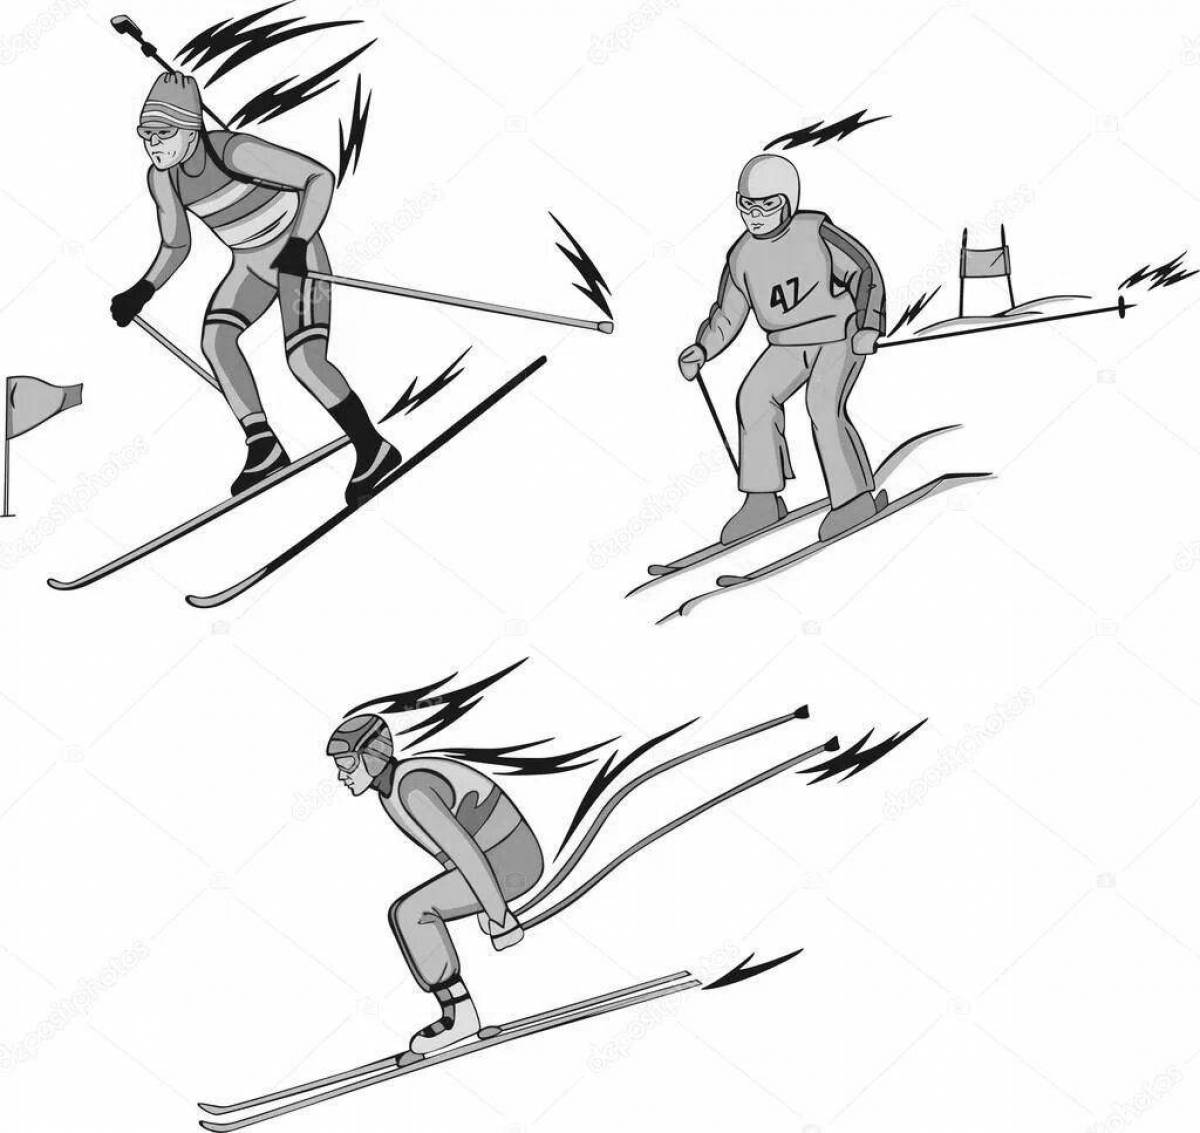 Skier in motion #5